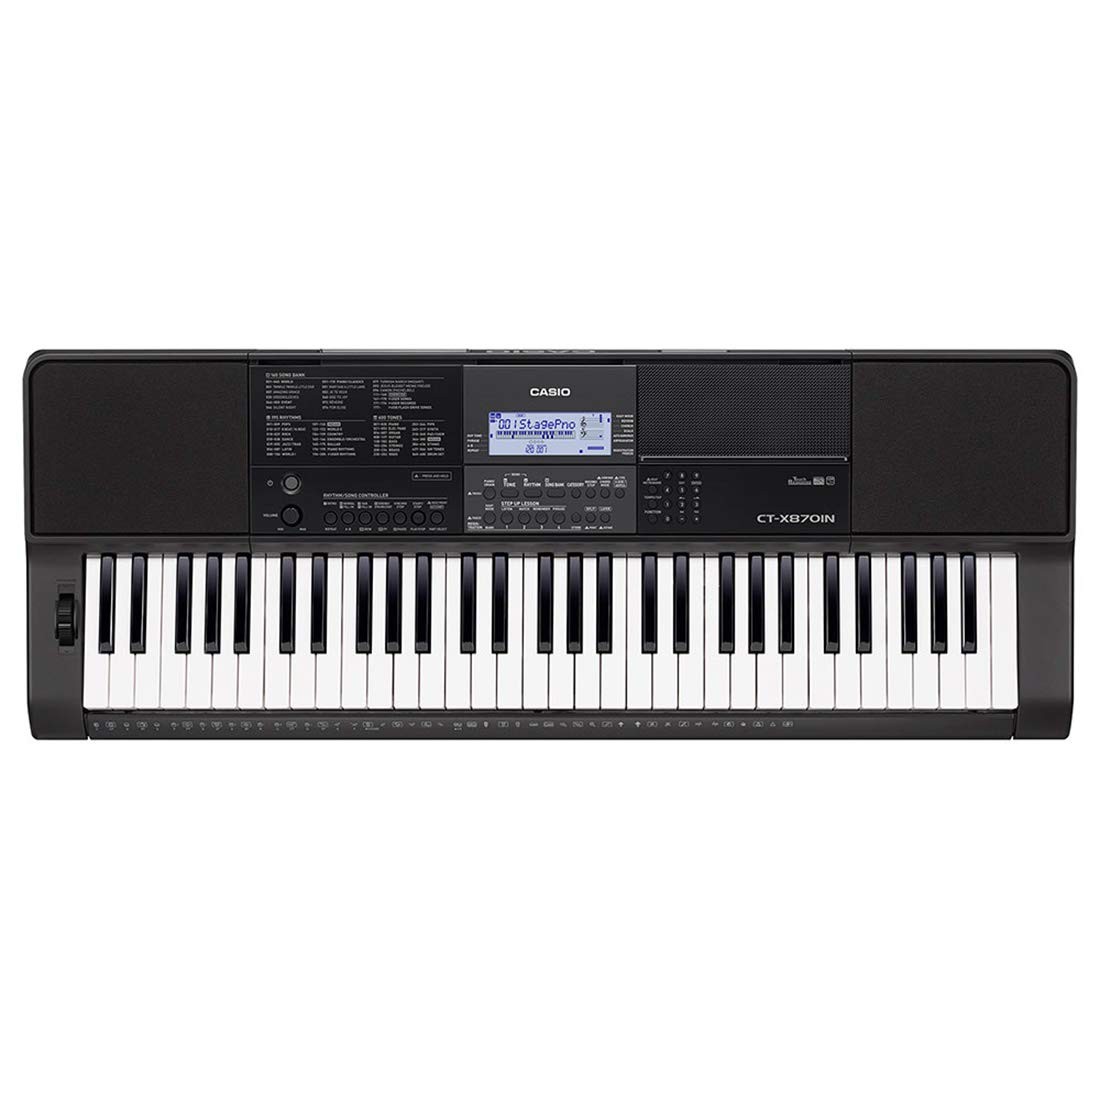 CASIO CT-X870IN Hi-Grade Portable Keyboard with Adaptor